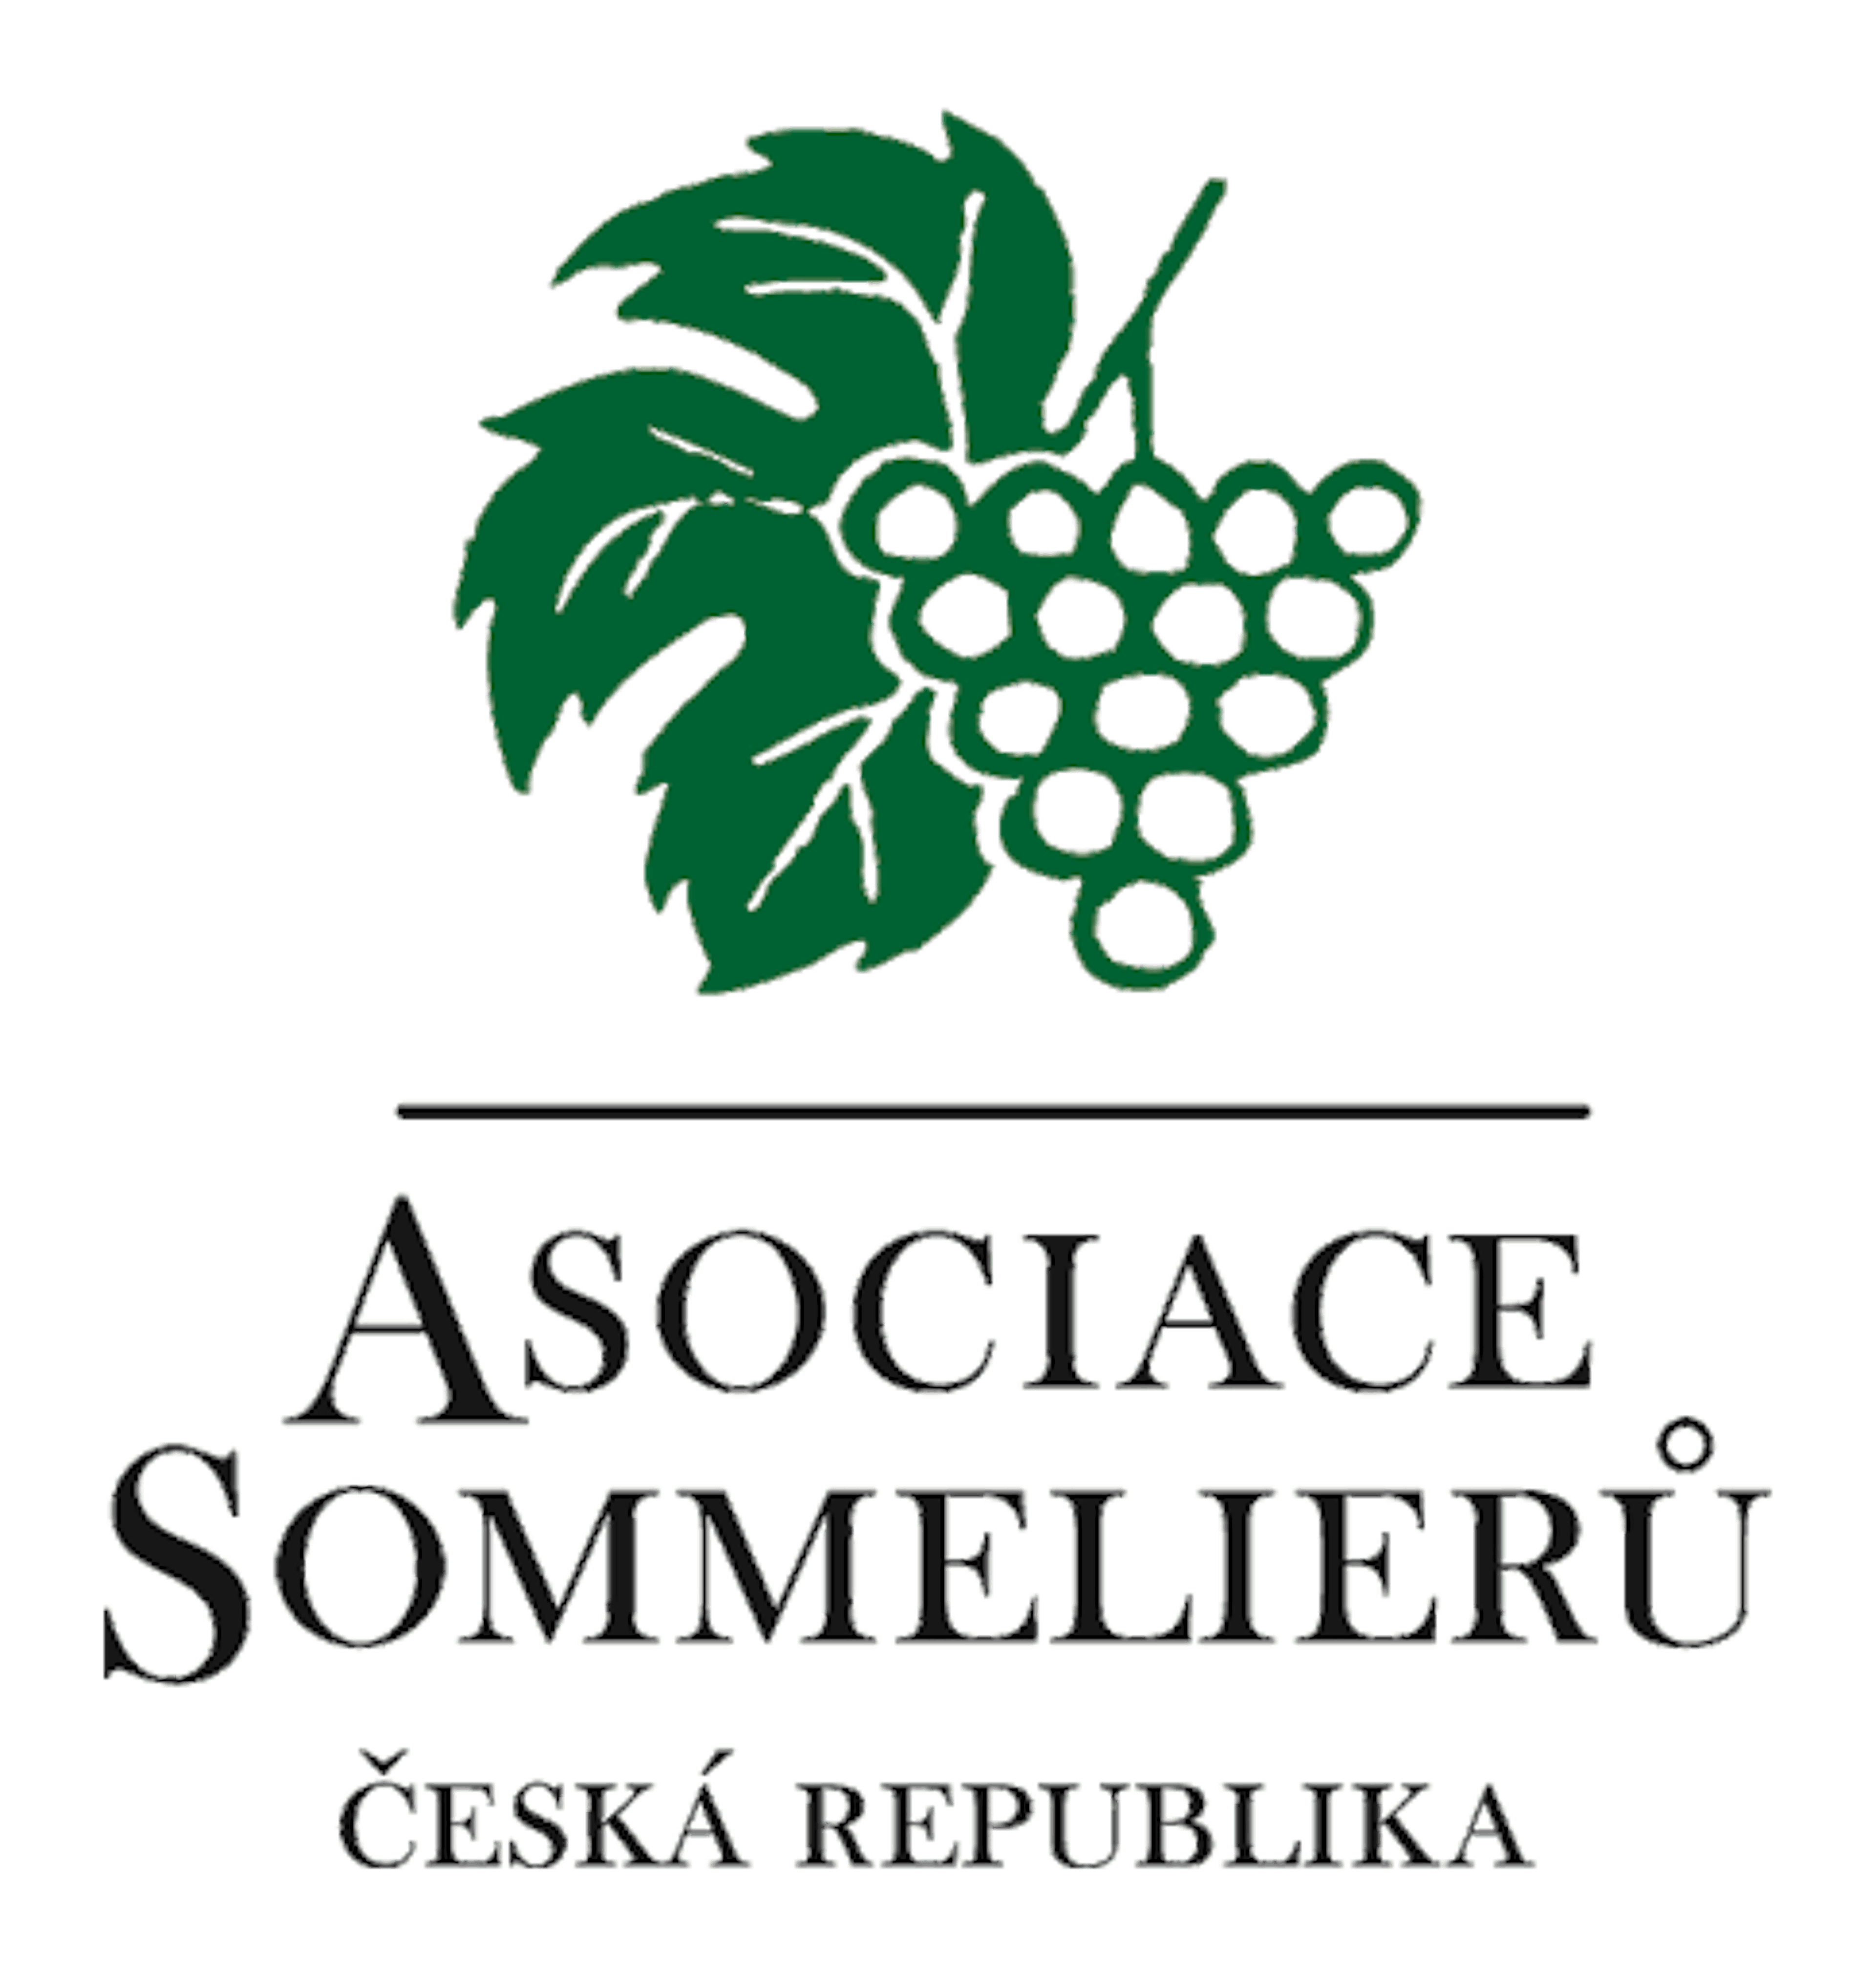 Asociace Sommeliérů Logo